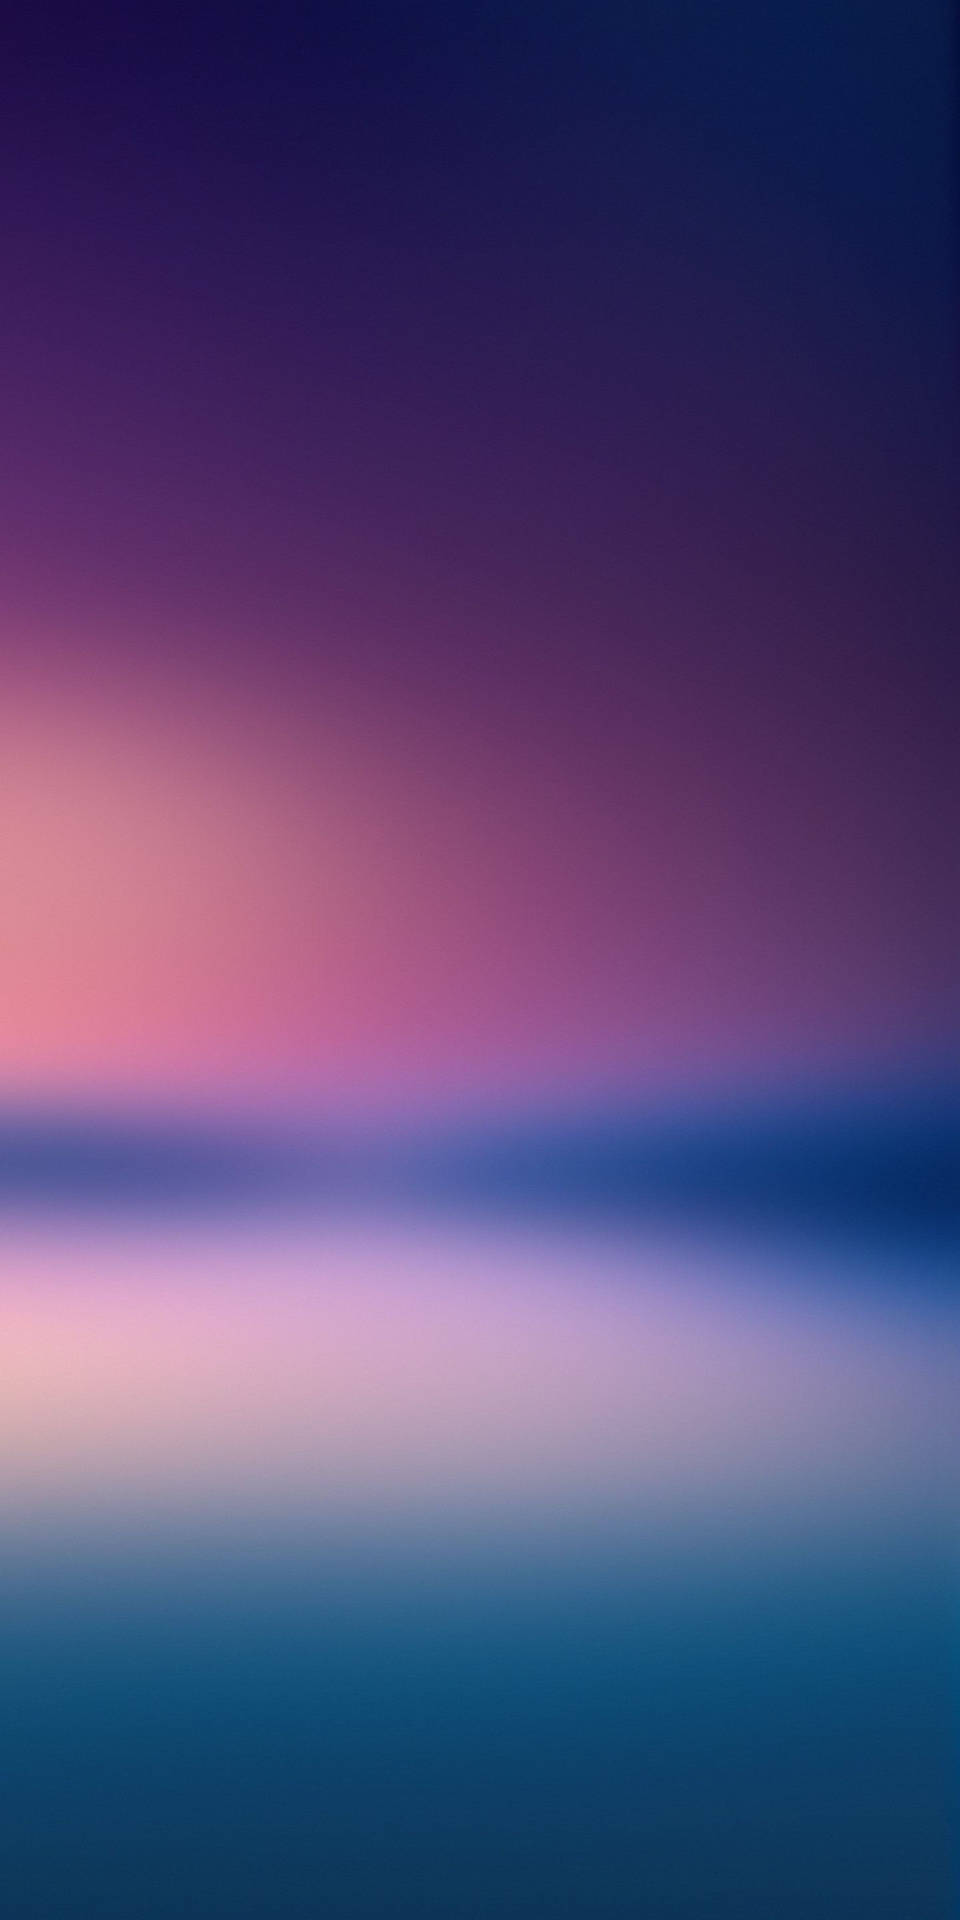 Stunning Lg Smartphone With Purple-blue Gradient Background